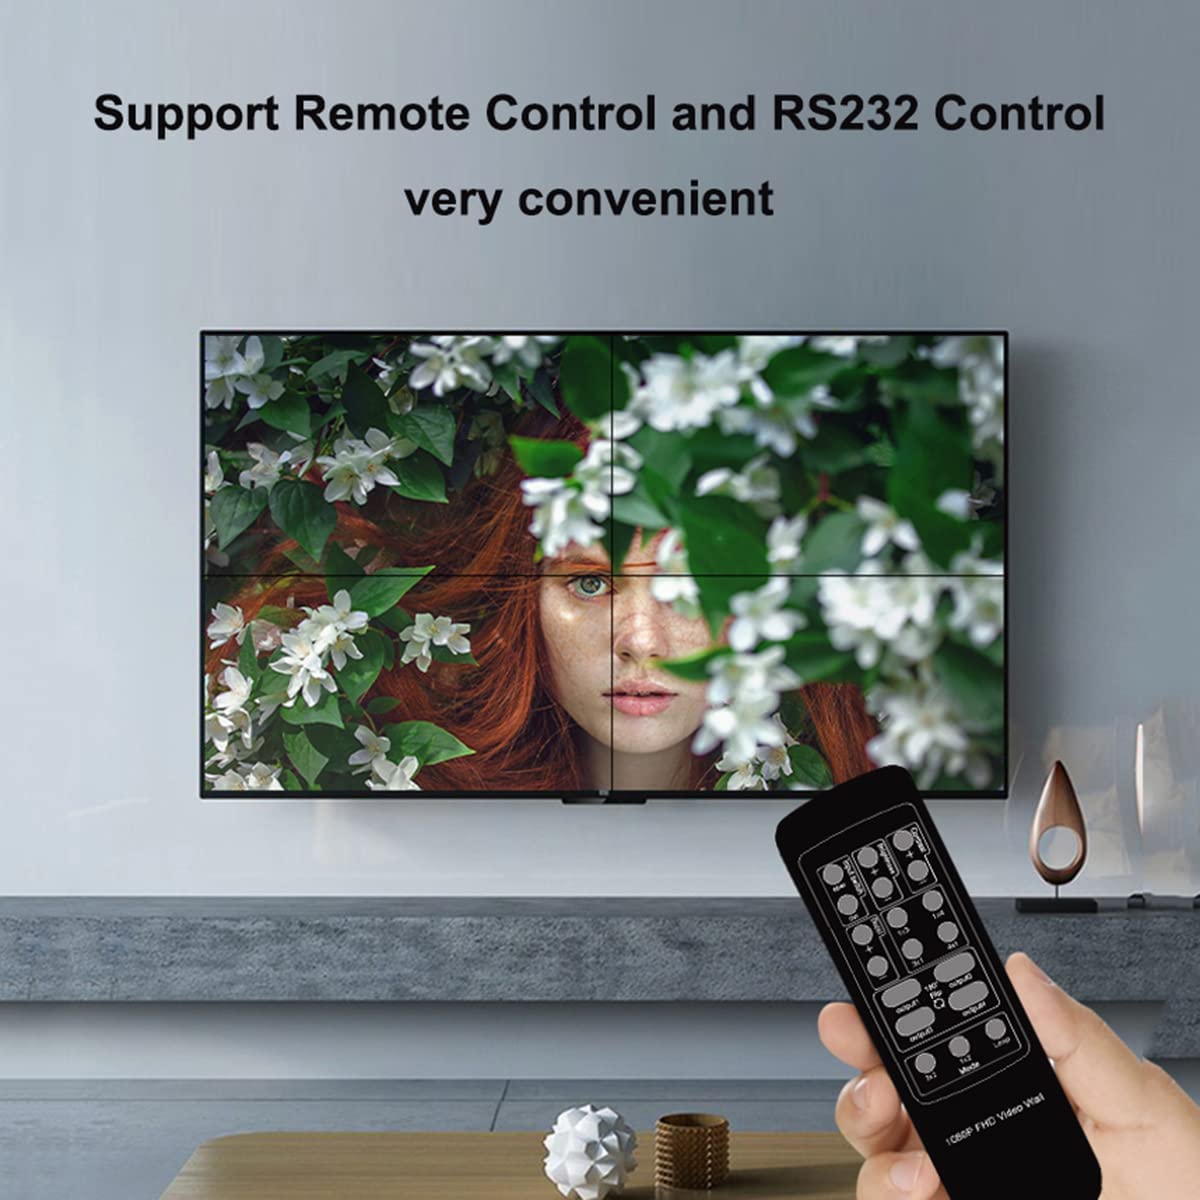 HF-VWC22A: 2x2 Video Wall Controller, 1080P@60HZ HD Display, 180 Degree Rotate, 8 Display Modes - 2x2, 1x2, 1x3, 1x4, 2x1, 3x1, 4x1,1 HDMI/DVI Input 4 HDMI Output with RS232 Control